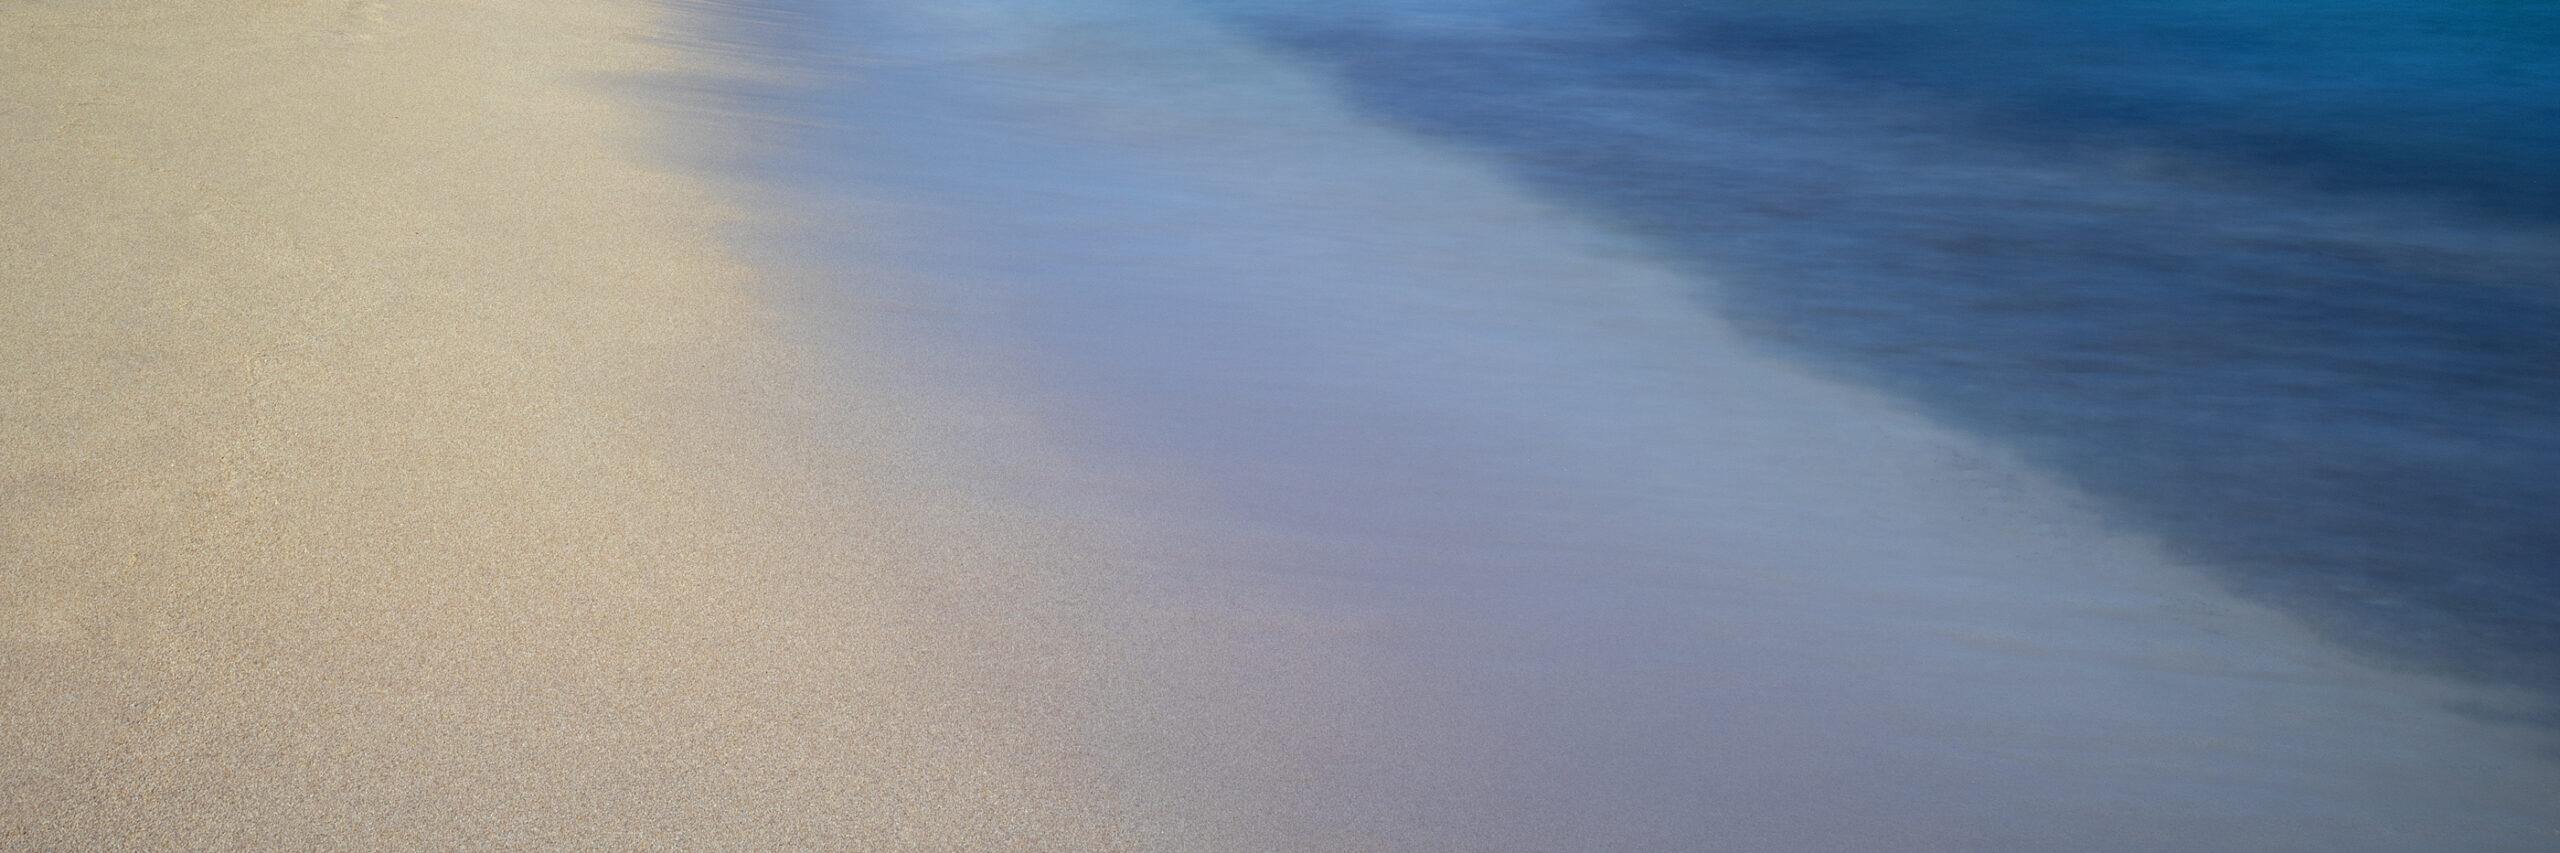 a close up of a beach